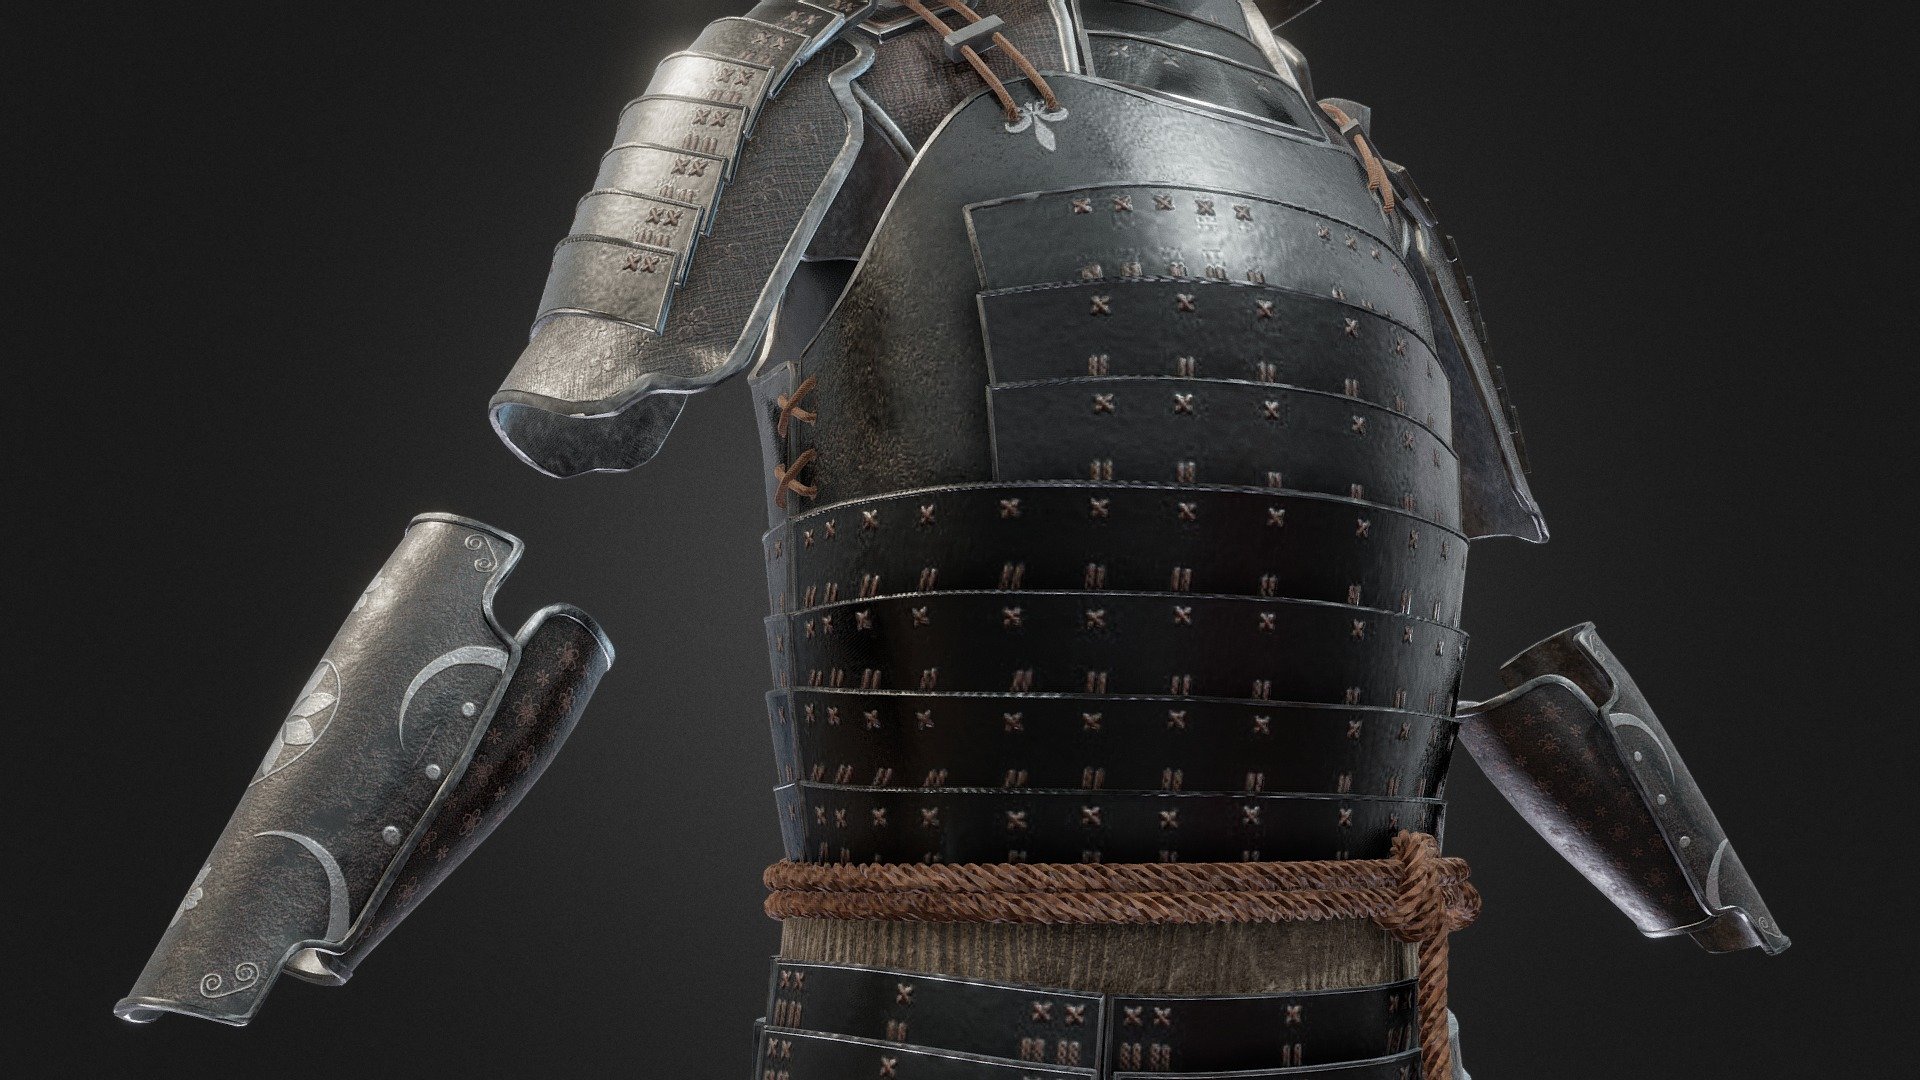 Samurai Armor - part of cgboost challenge - modelcreated in Blender 3D, painted in Substance Painter

Renders -&gt; https://www.behance.net/gallery/100868899/Samurai-armor - Samurai Armor - 3D model by skibigfx 3d model